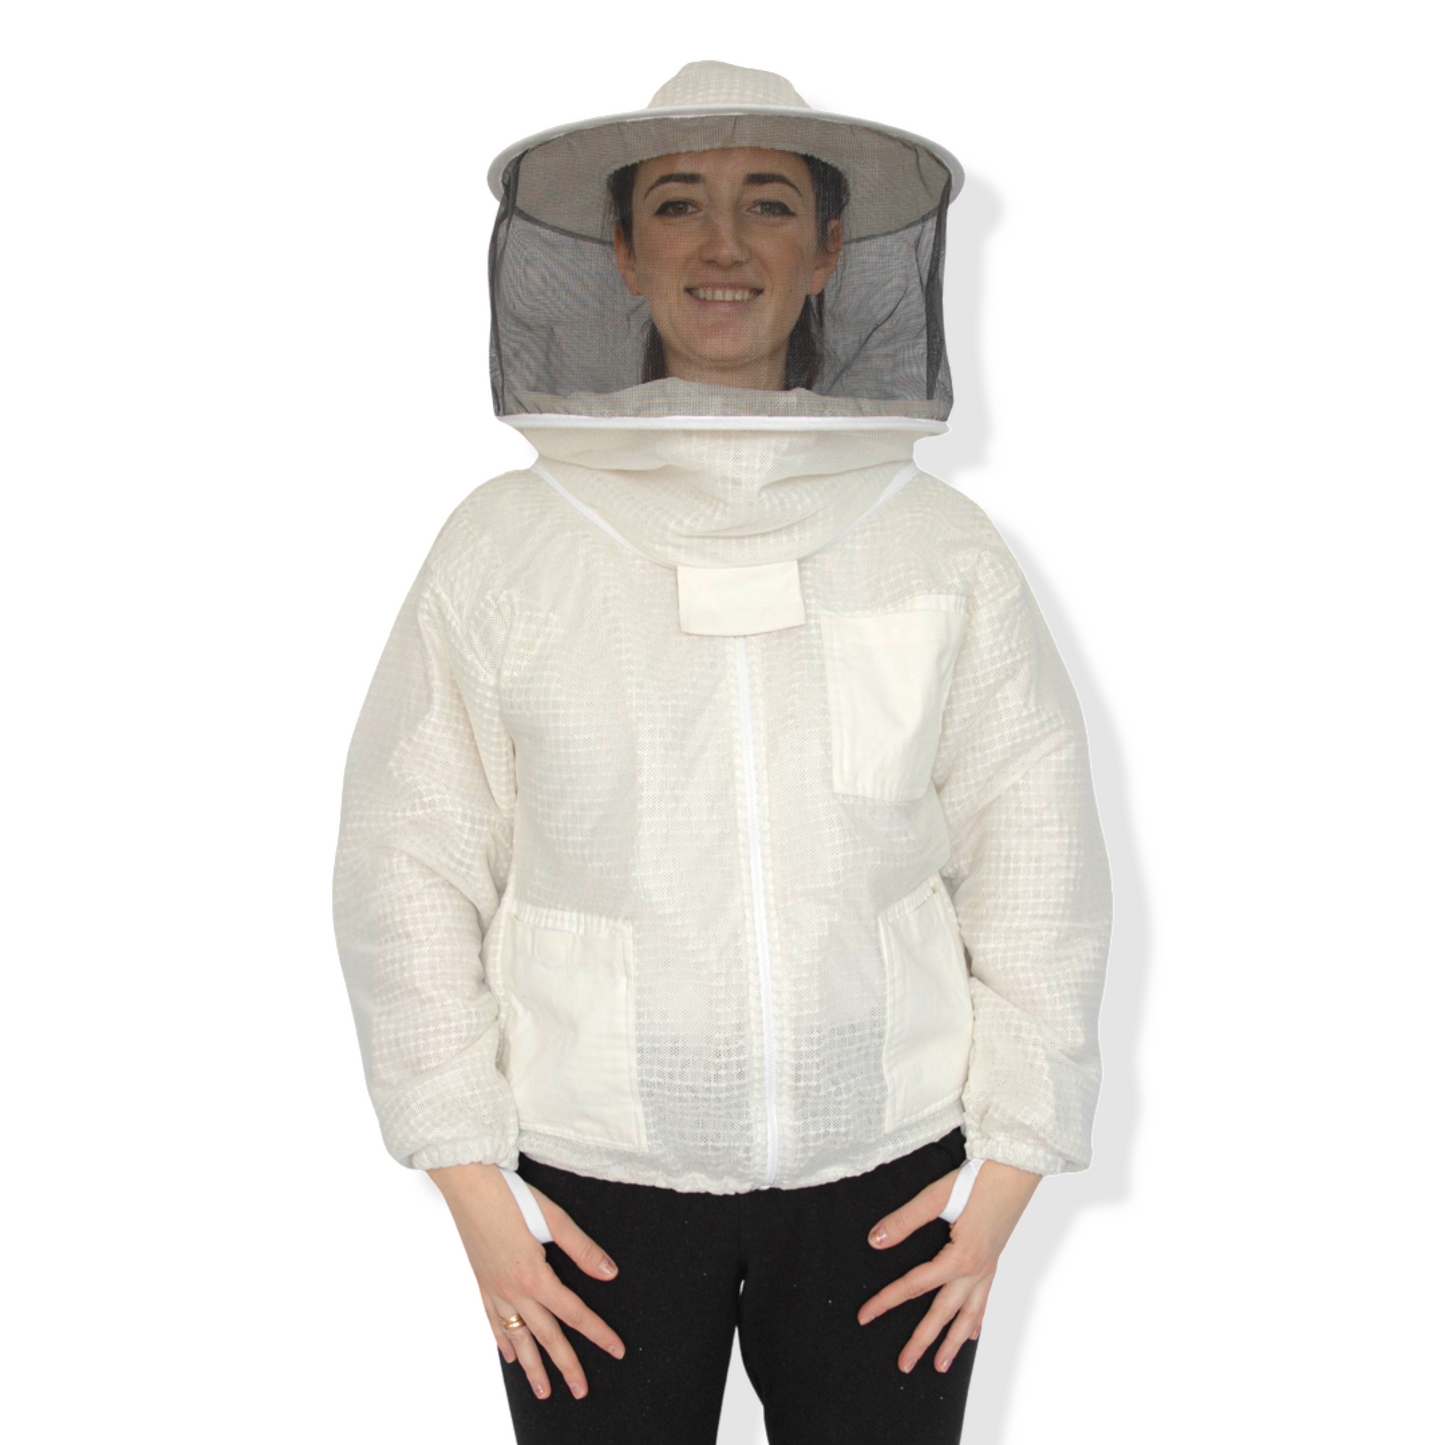 BEEATTIRE Ventilated Bee Jacket Round Hood - 3 Layer Mesh Ultra Vented Beekeeping Jacket Ventilated Beekeeper Jacket